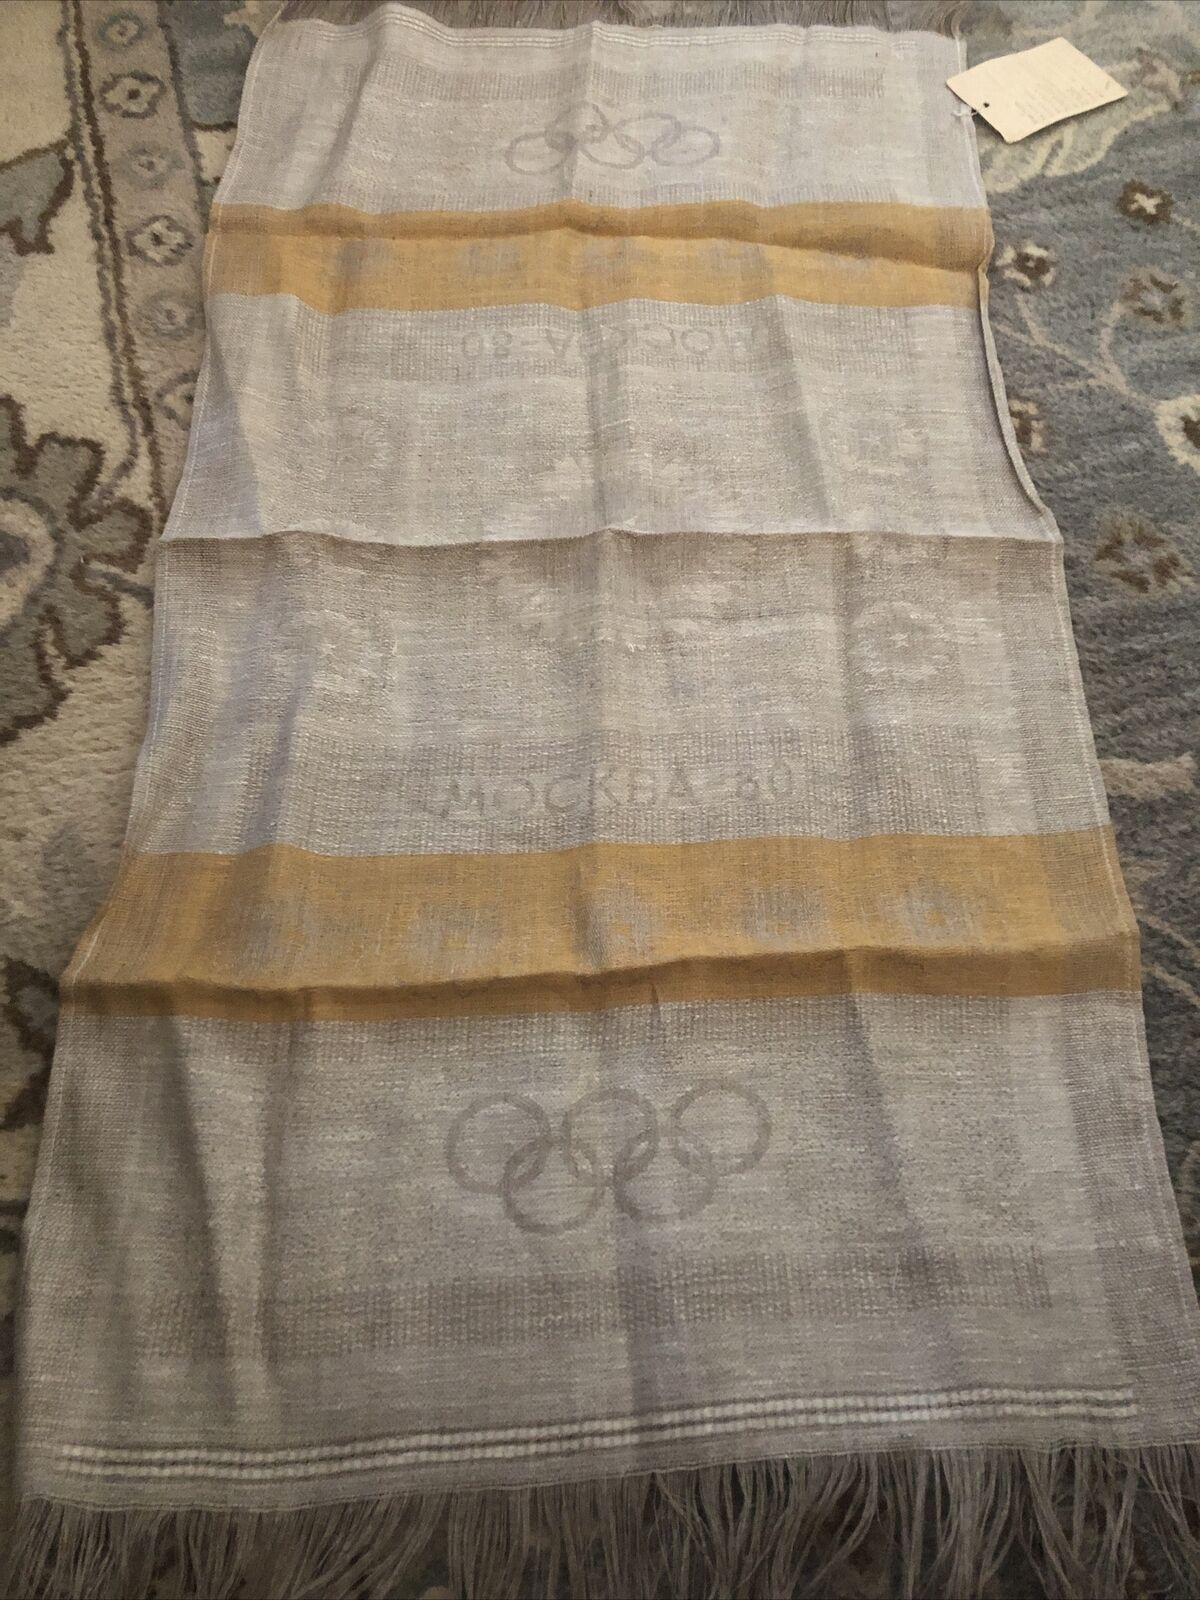 1980 Mockba Russia Olympics Textile Fringe Decorative Runner